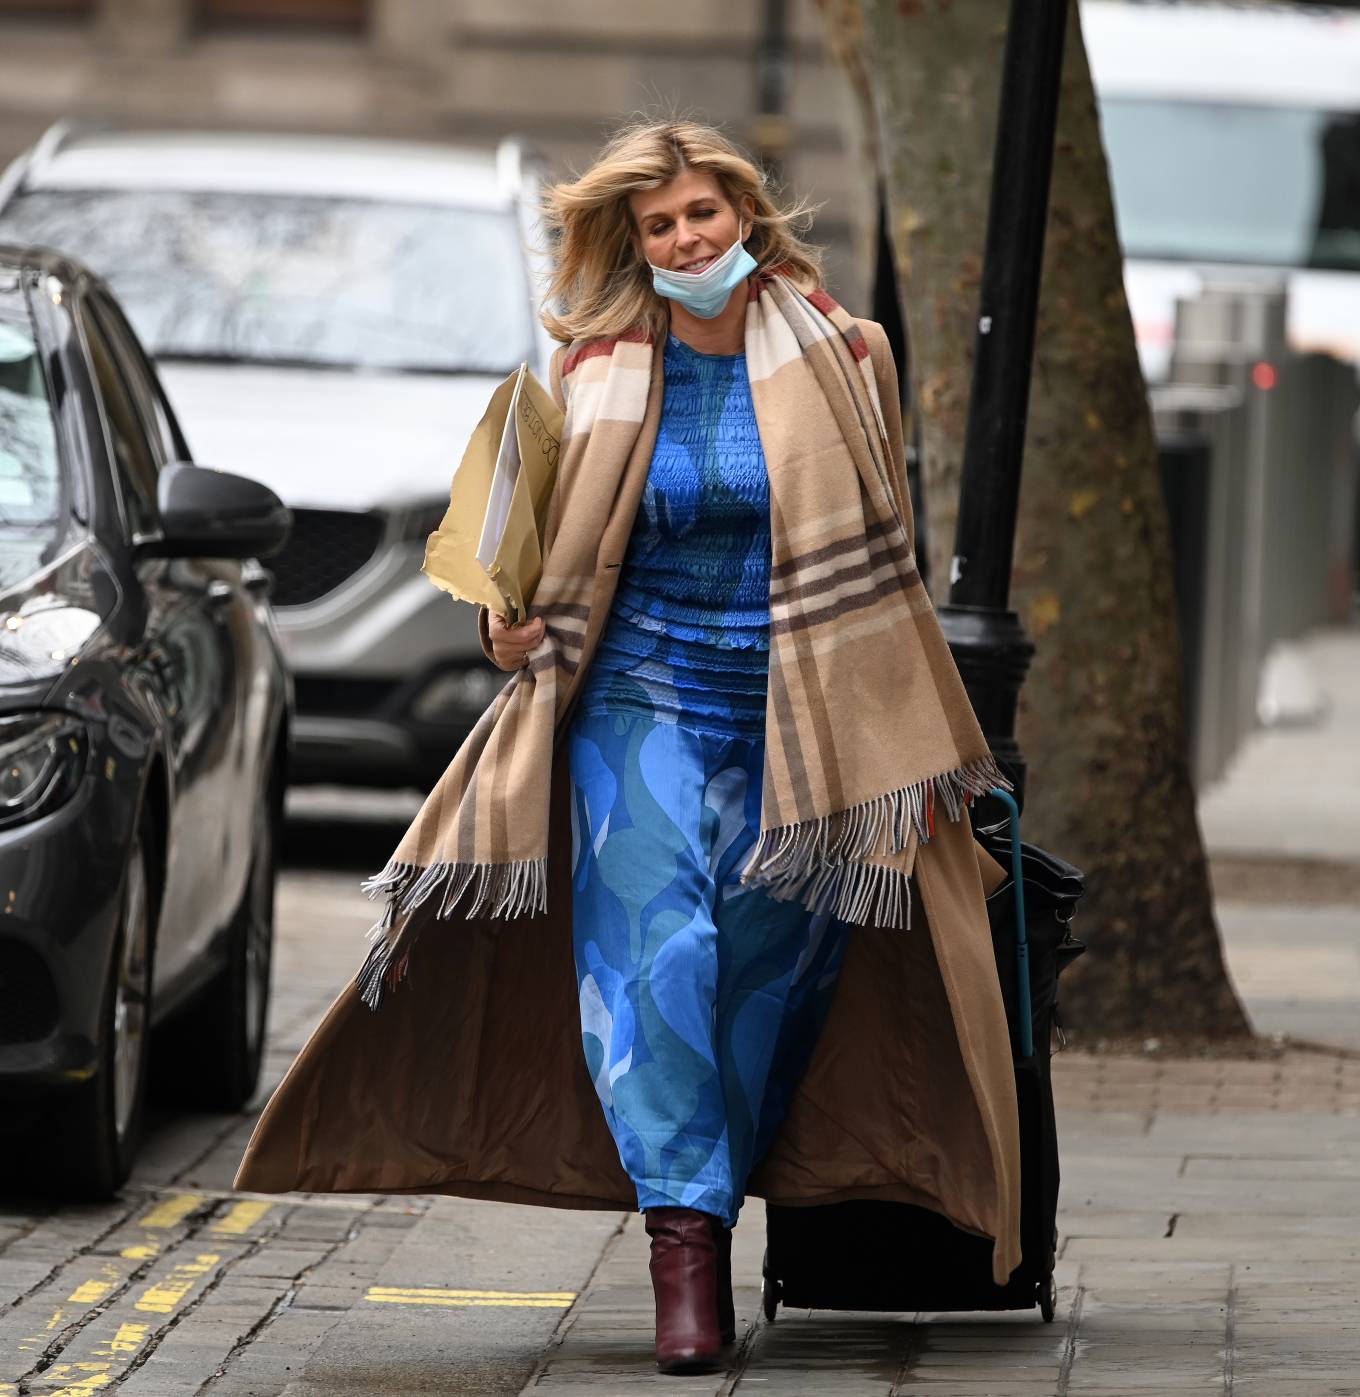 Kate Garraway – In blue dress at Smooth radio in London